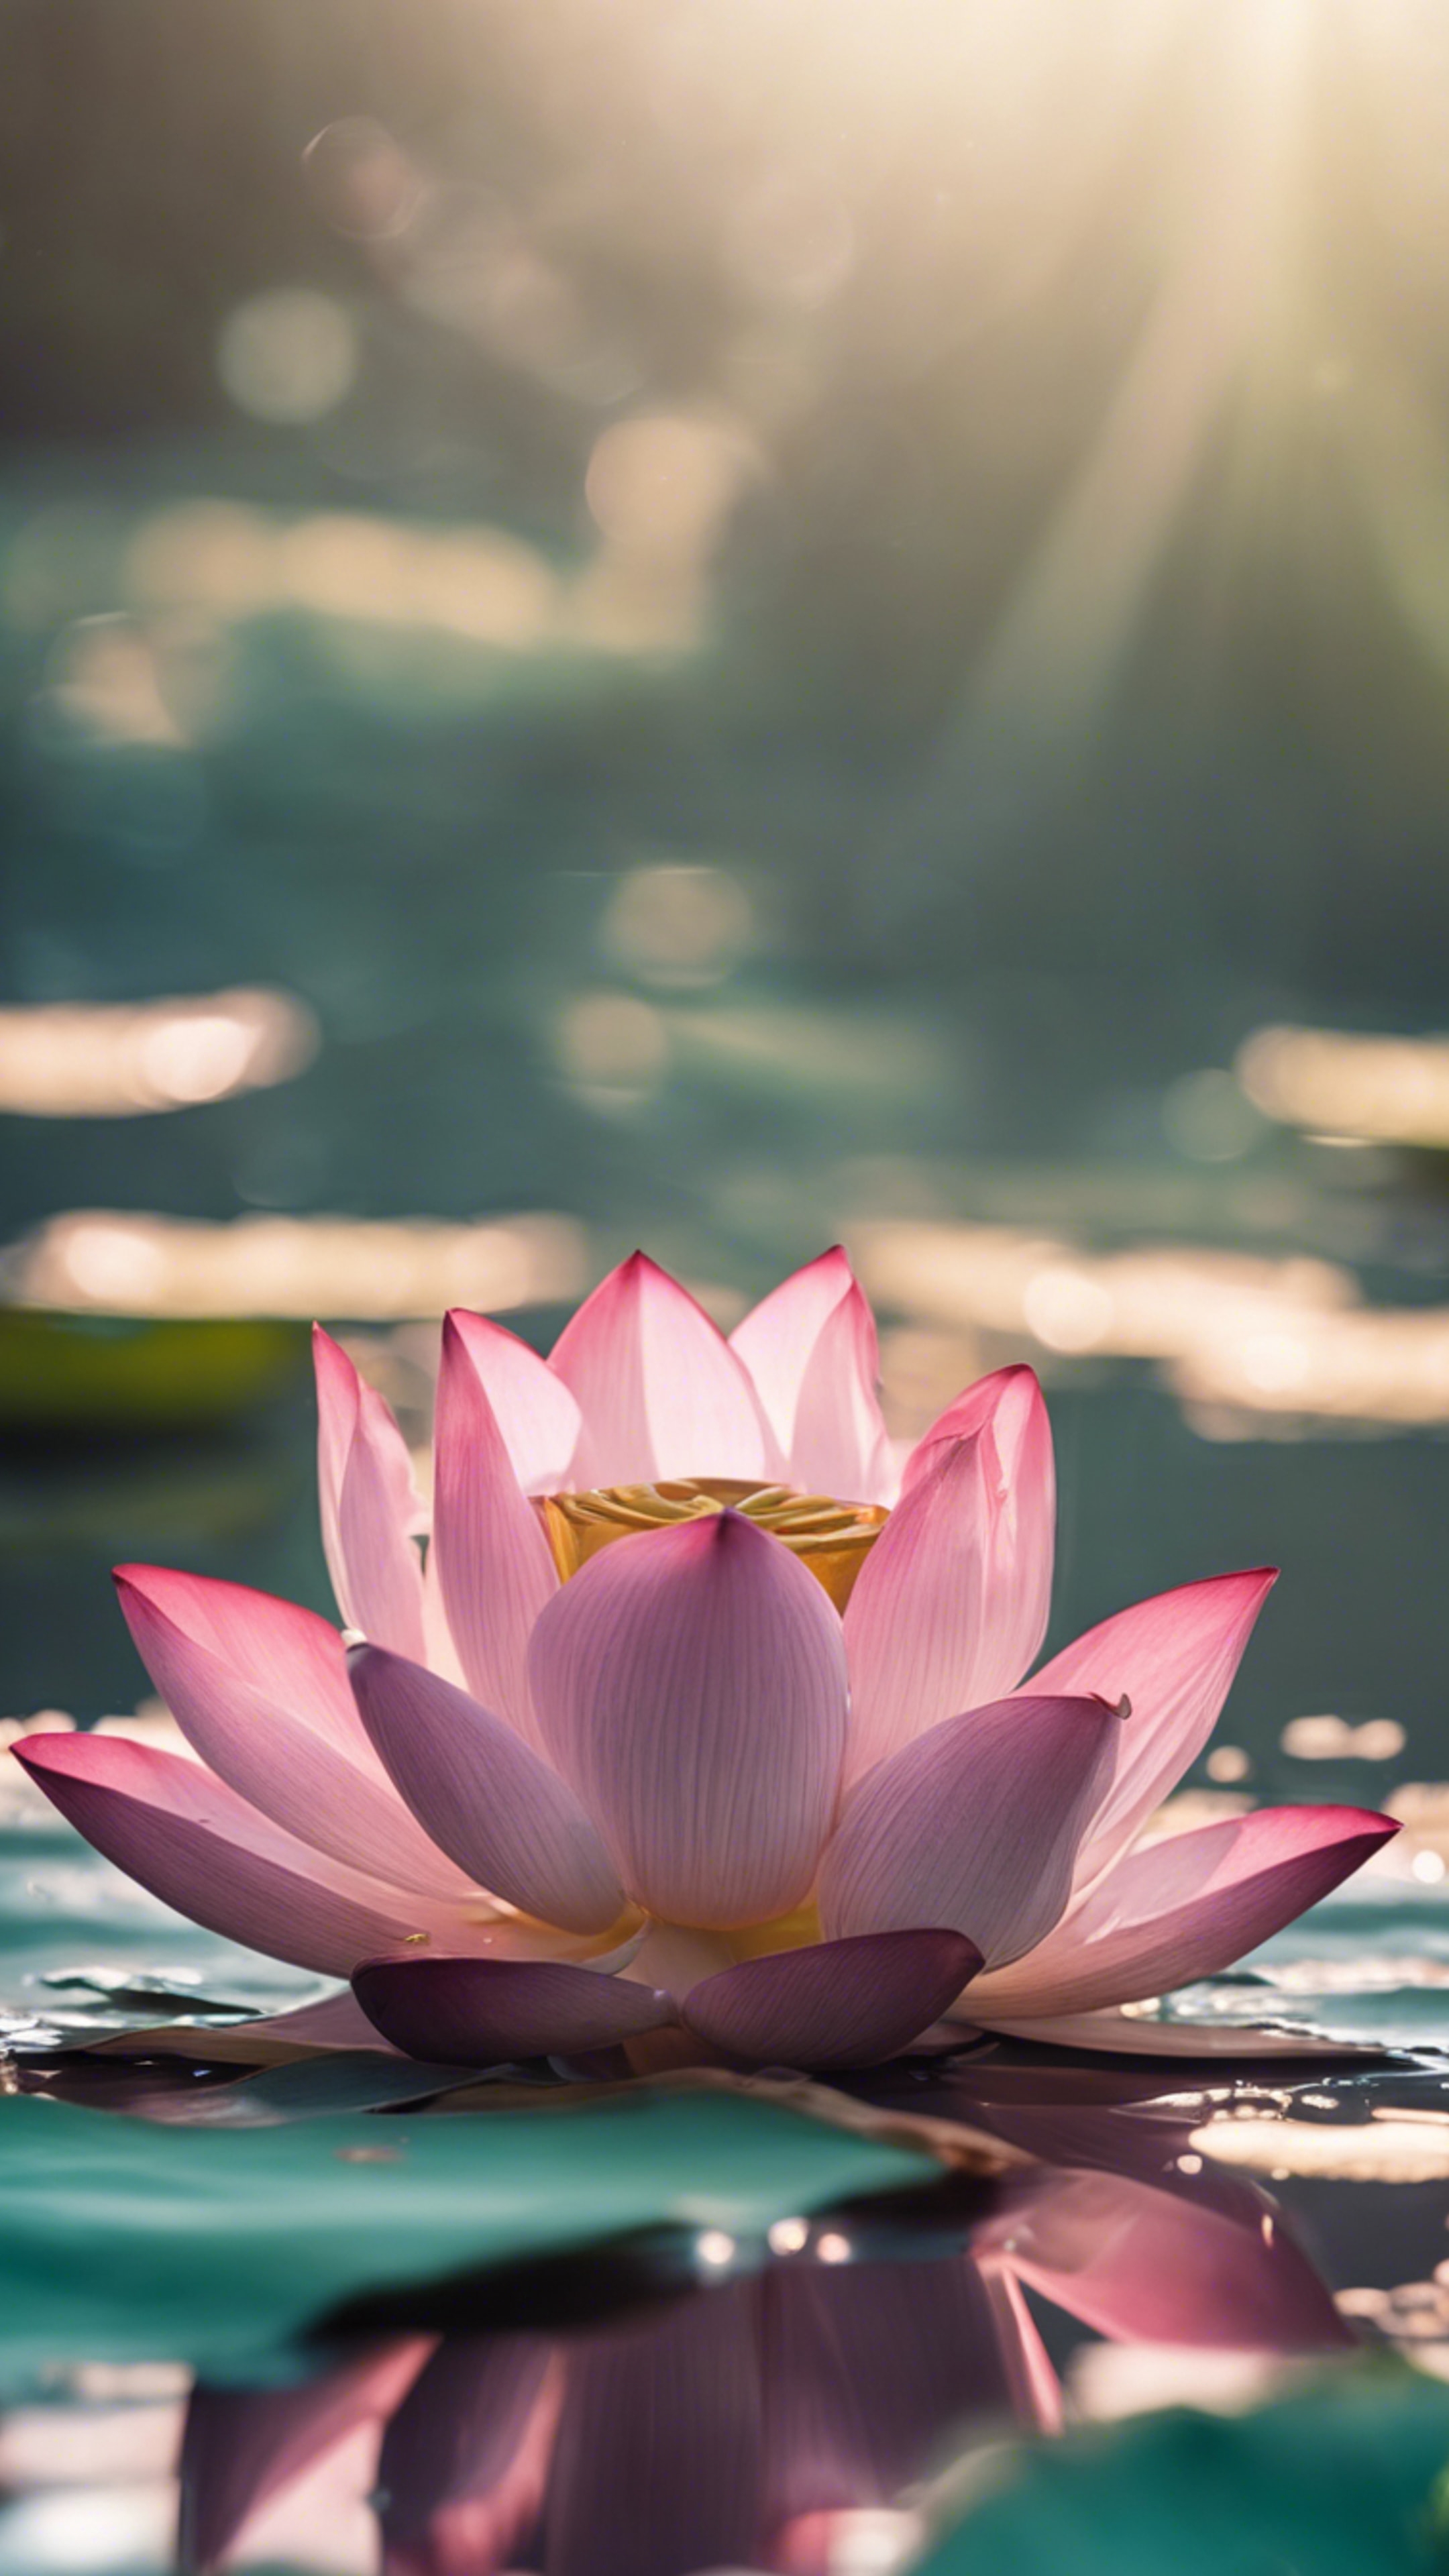 A close-up image of a single blooming lotus on a clear pond. Divar kağızı[056d411e4bd14d9f8d69]